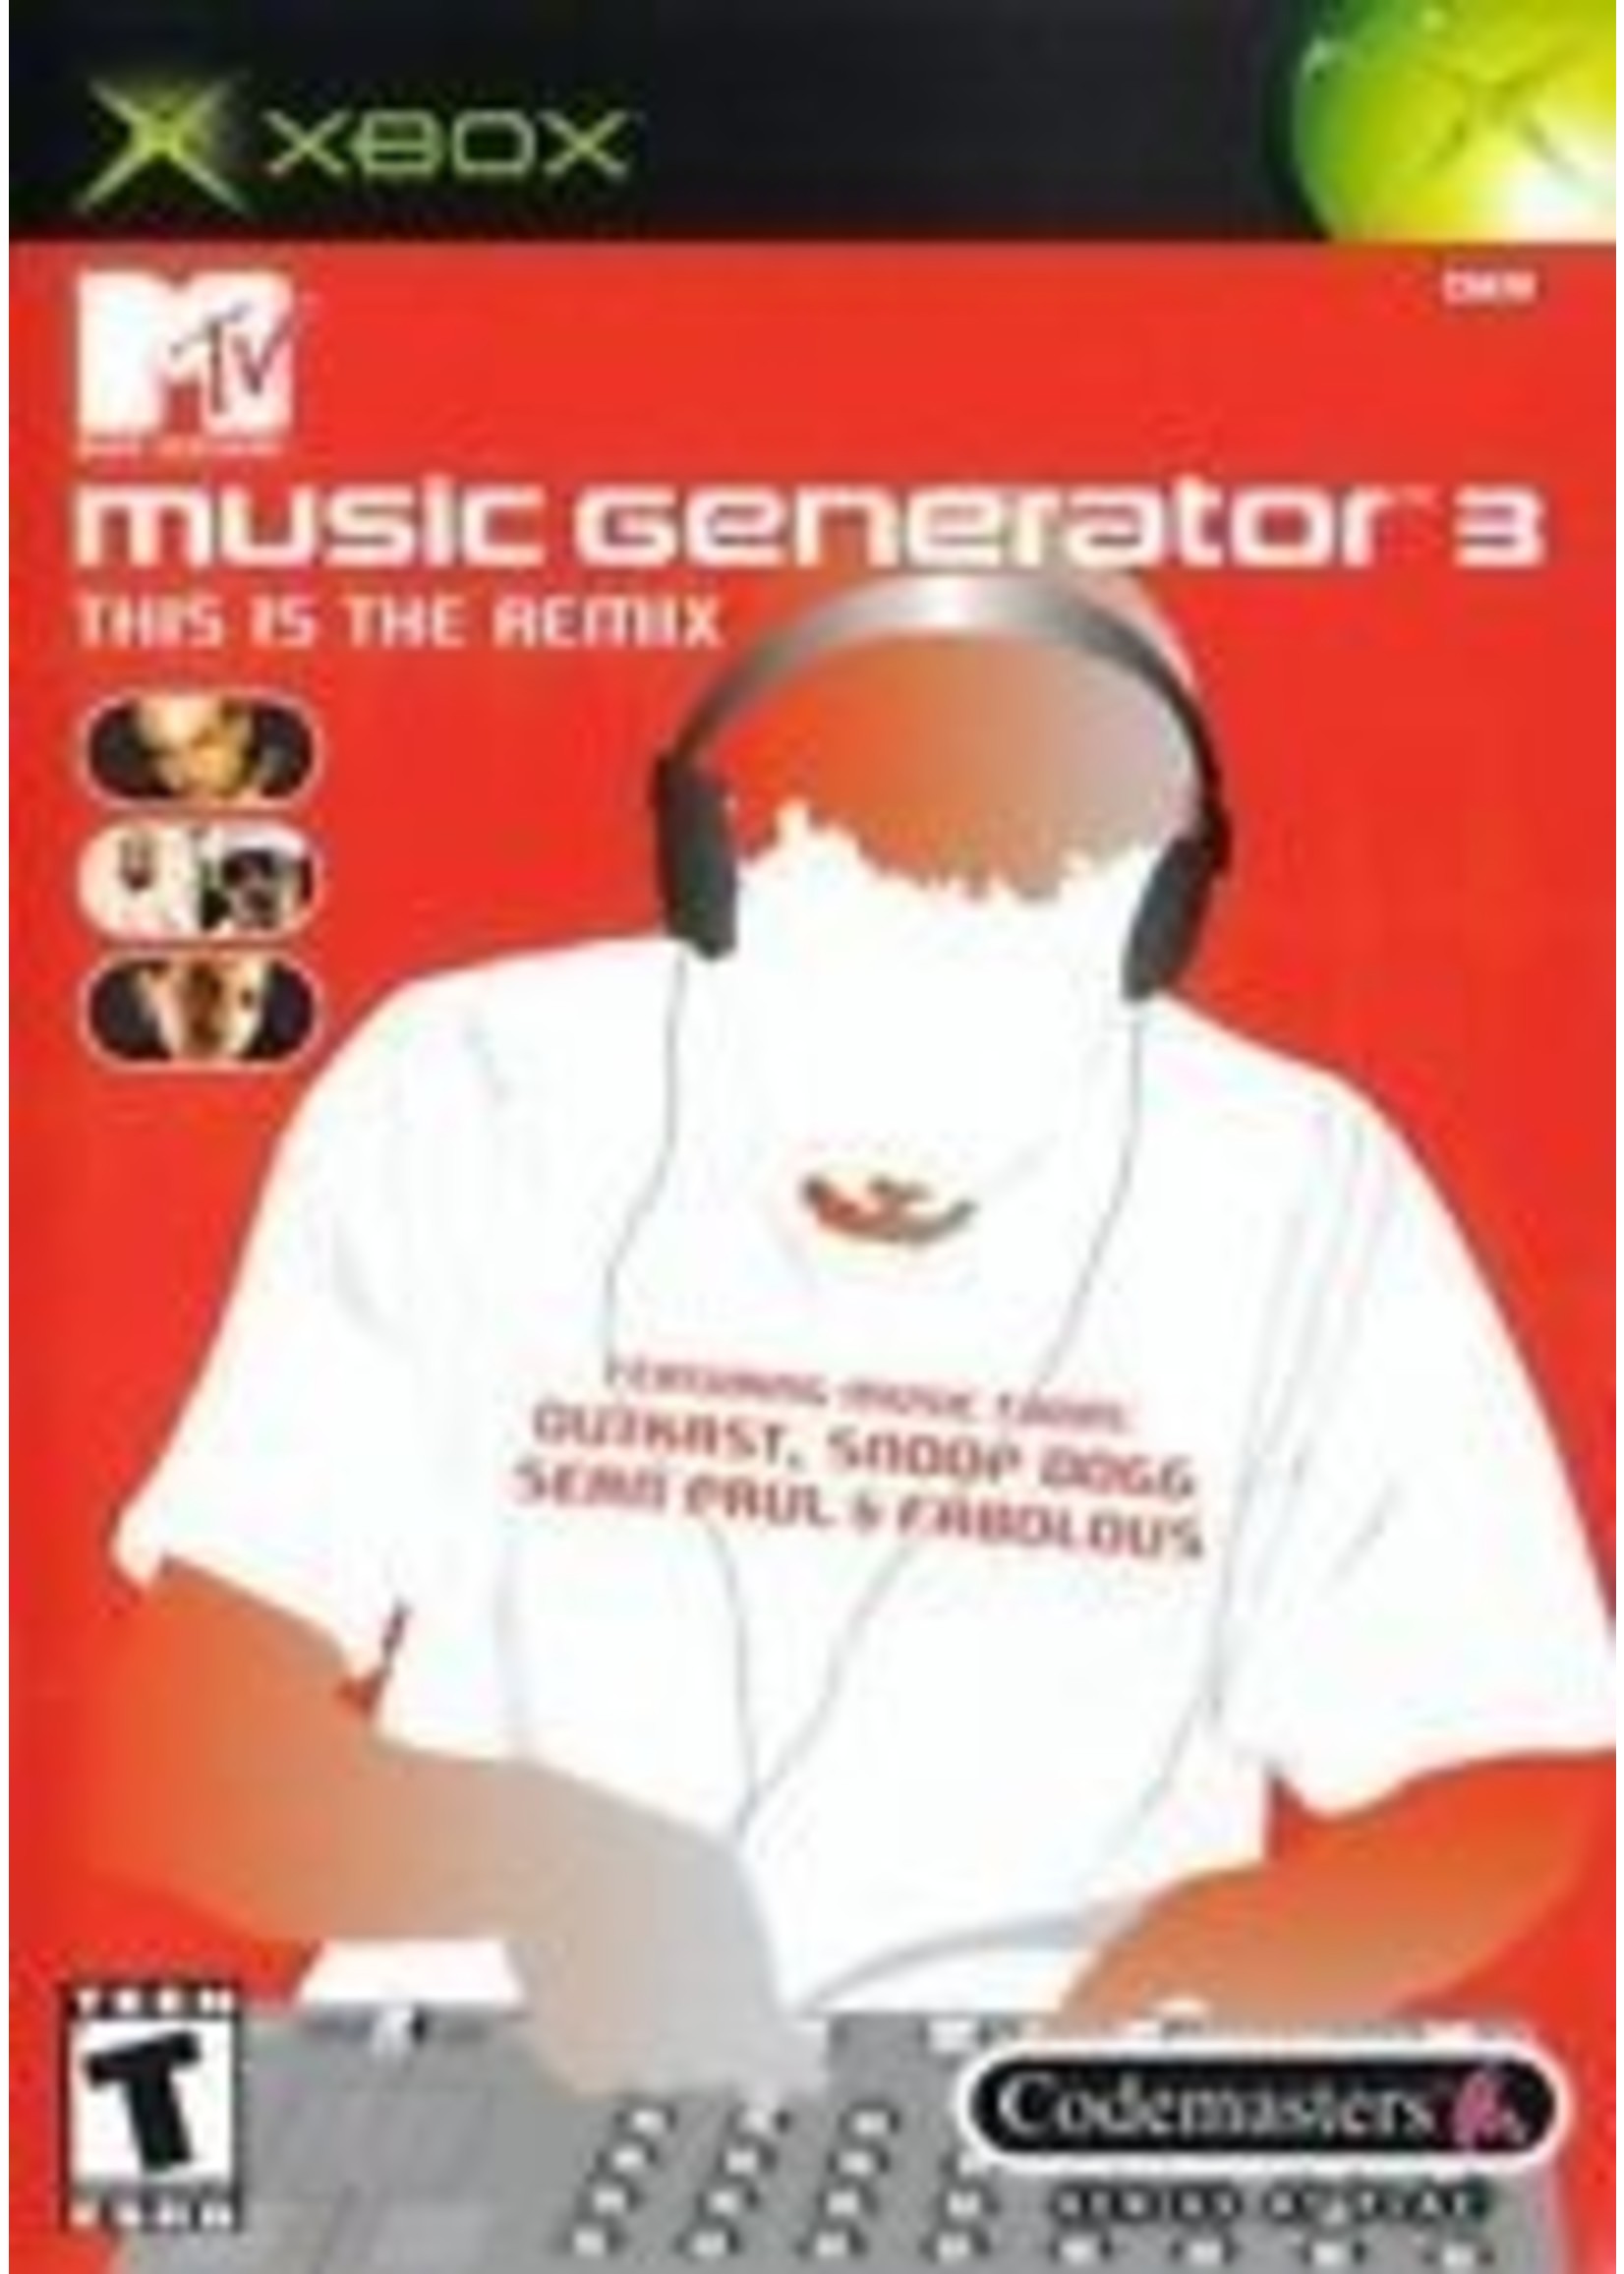 Microsoft Xbox MTV Music Generator 3 This is the Remix